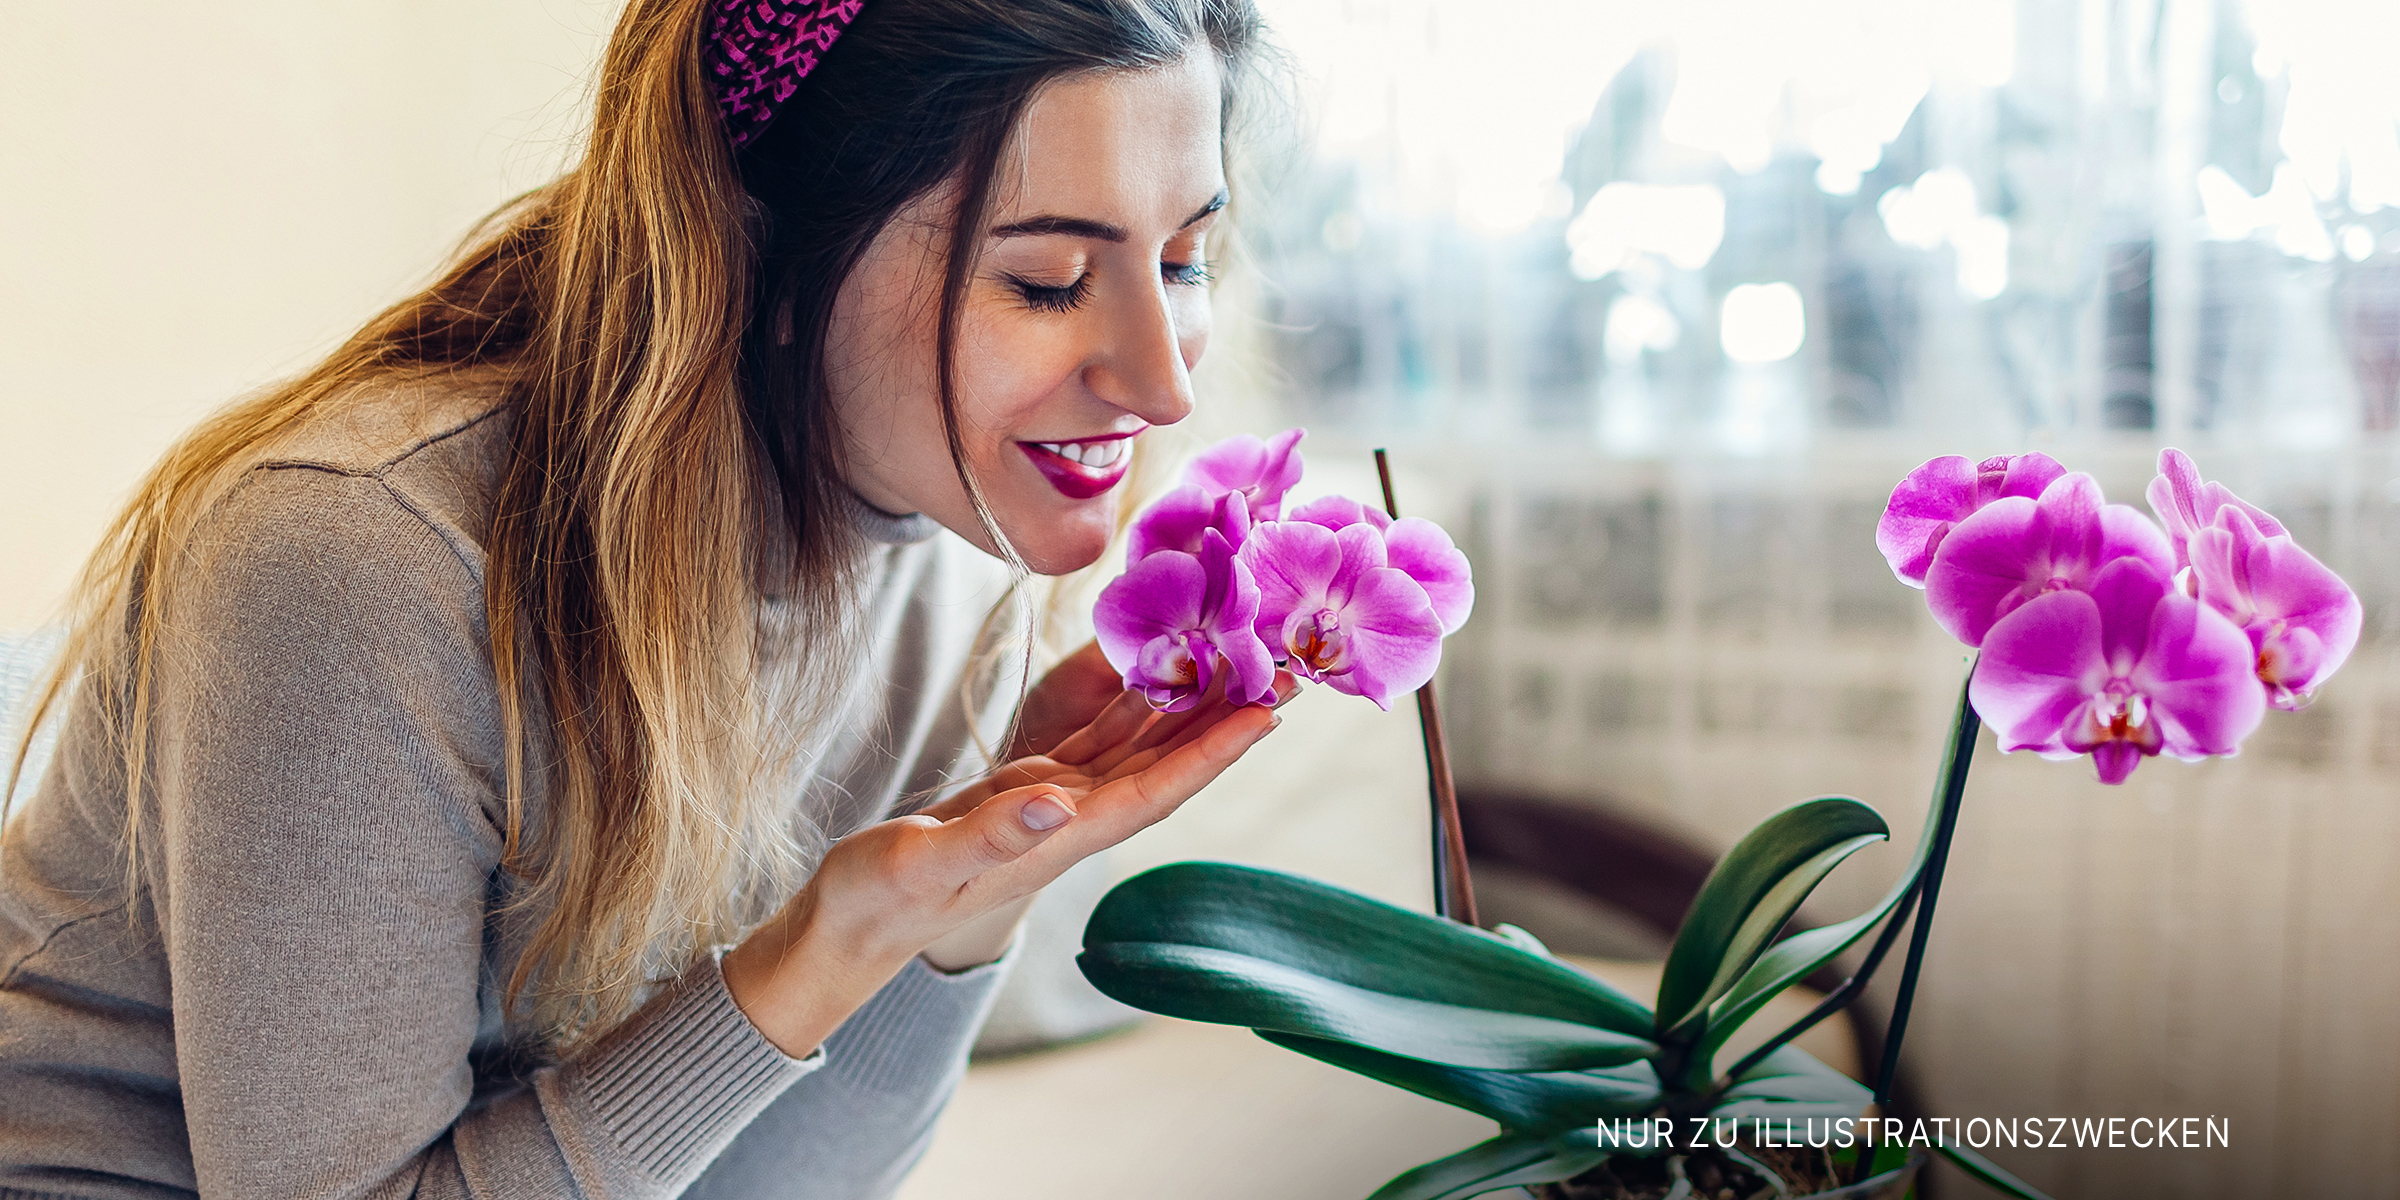 Eine Frau riecht an den Blumen | Quelle: Shutterstock